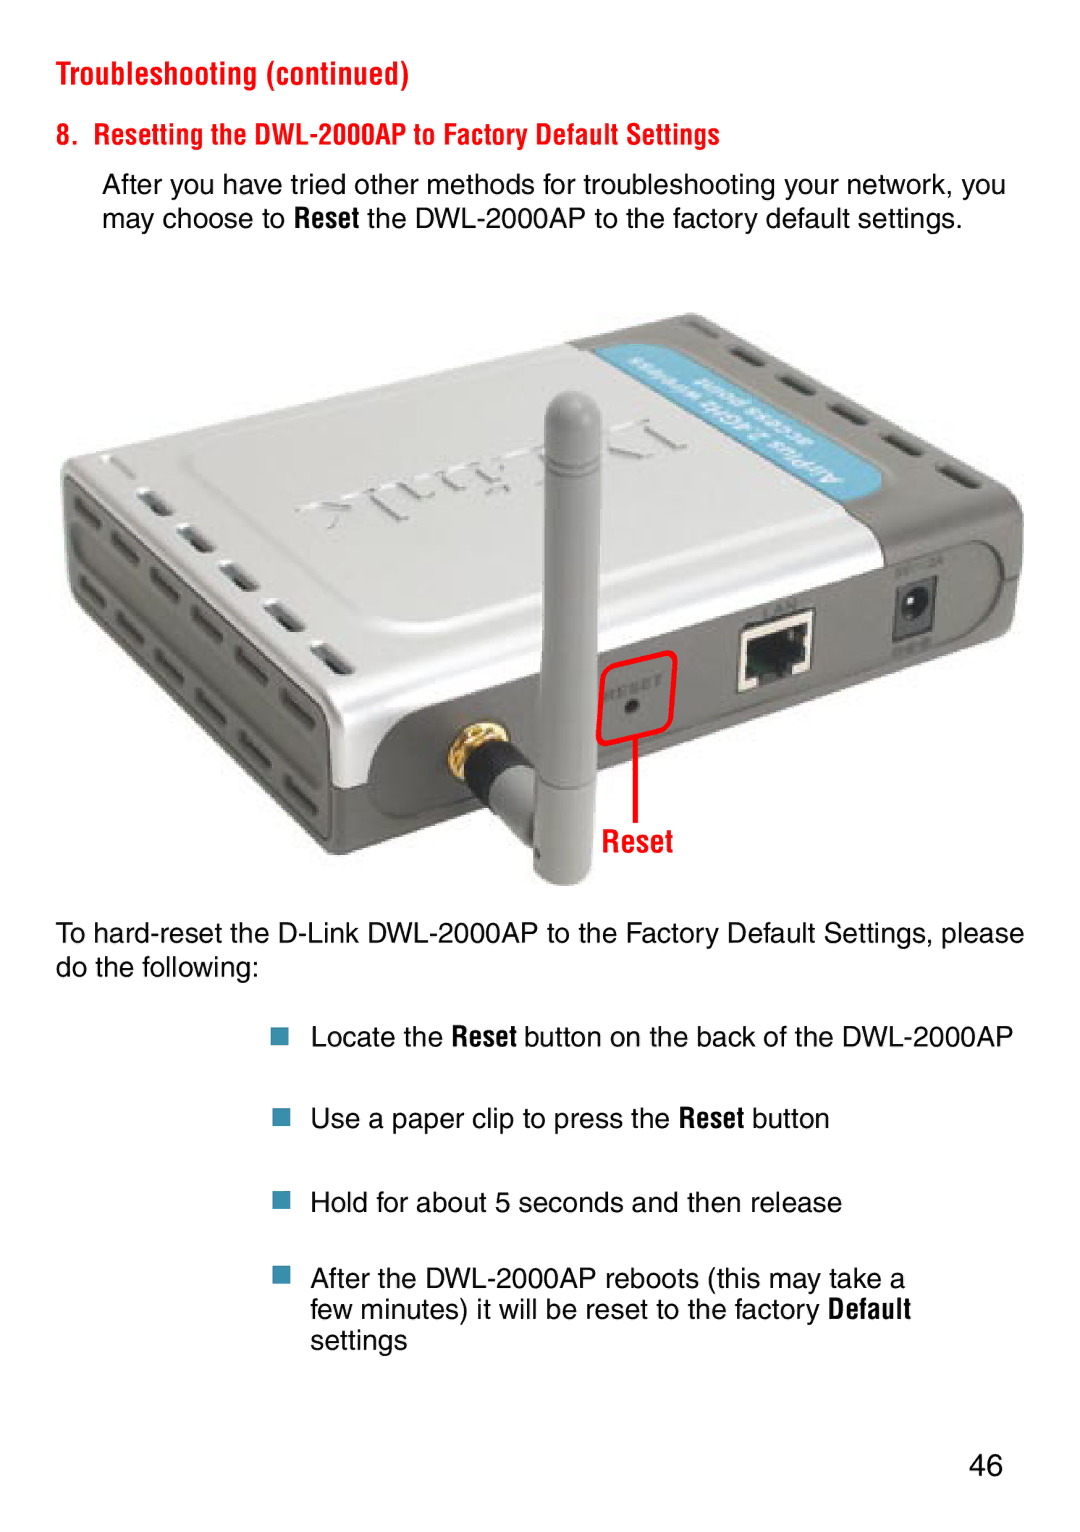 D-Link manual Resetting the DWL-2000AP to Factory Default Settings 